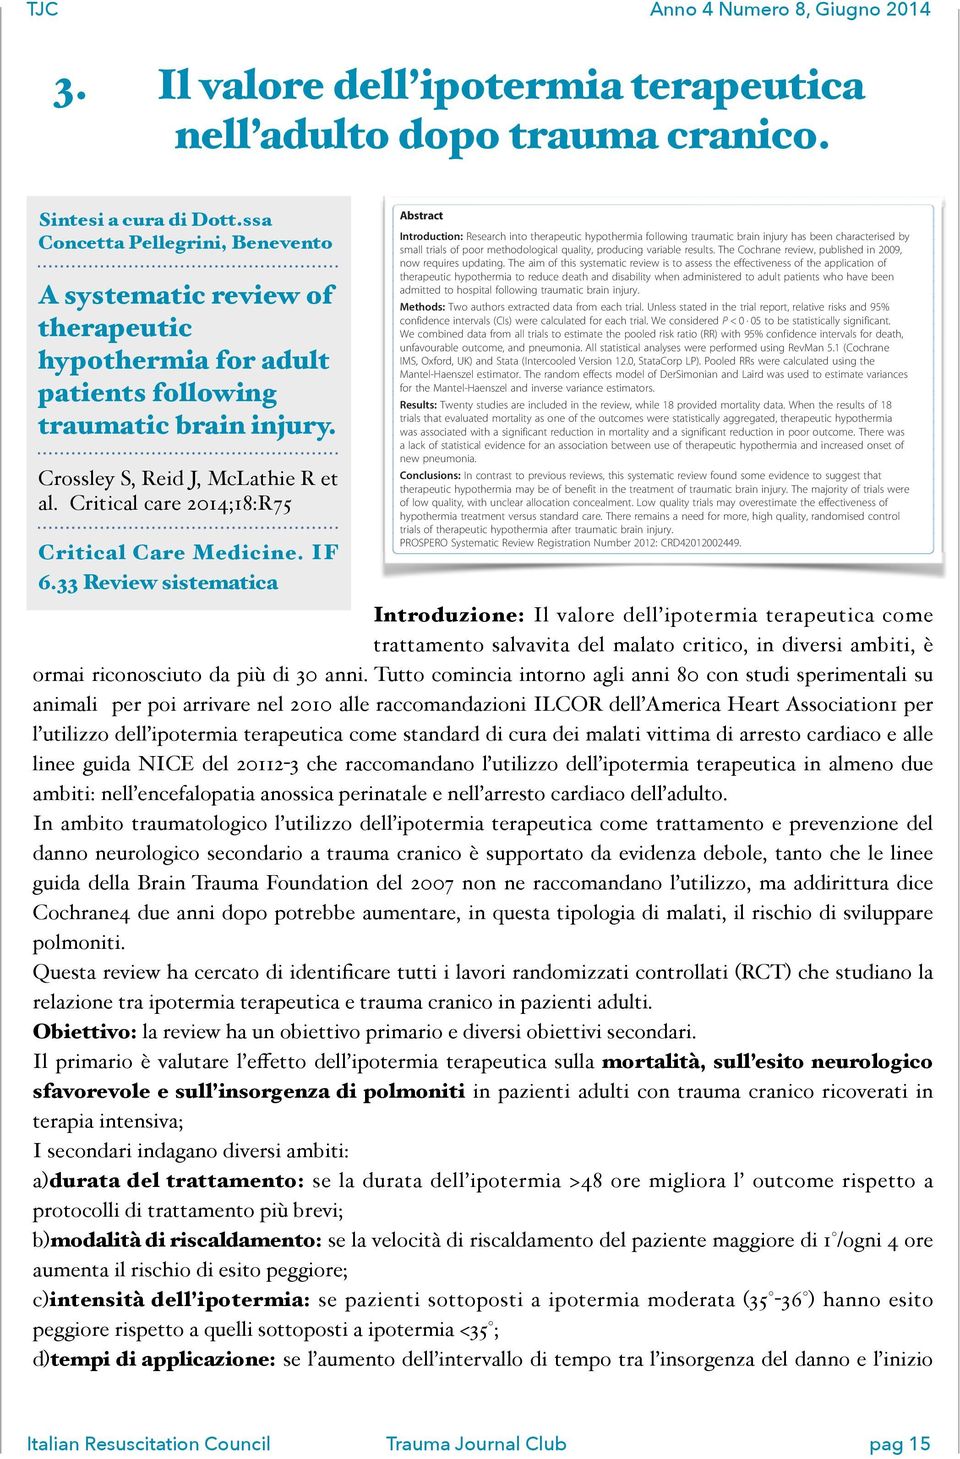 Critical care 2014;18:R75 Critical Care Medicine. IF 6.33 Review sistematica Crossley et al. Critical Care 2014, 18:R75 http://ccforum.